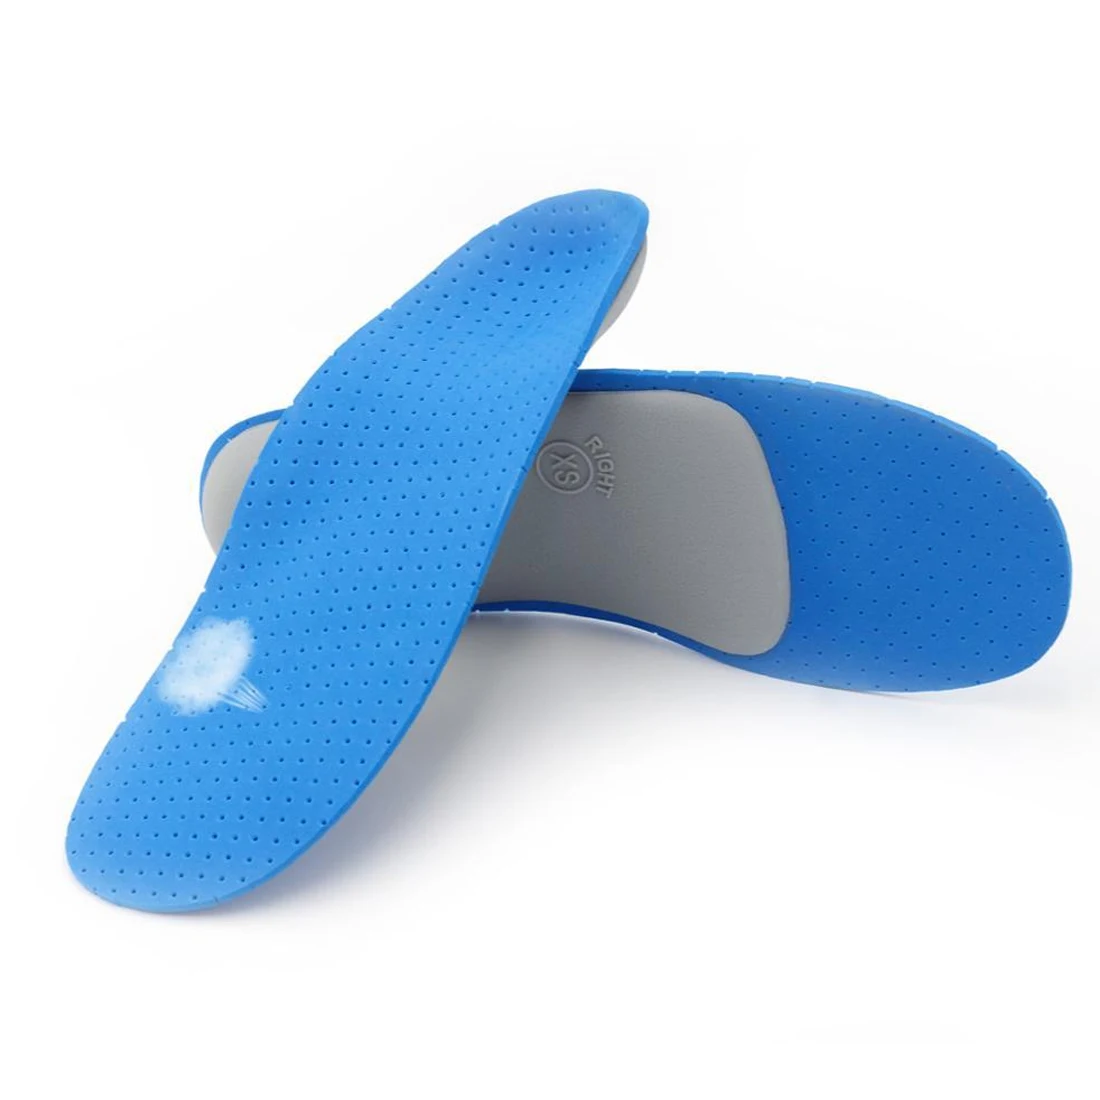 Aliexpress.com : Buy Comfortable Orthotics flat foot Insole TPU ...